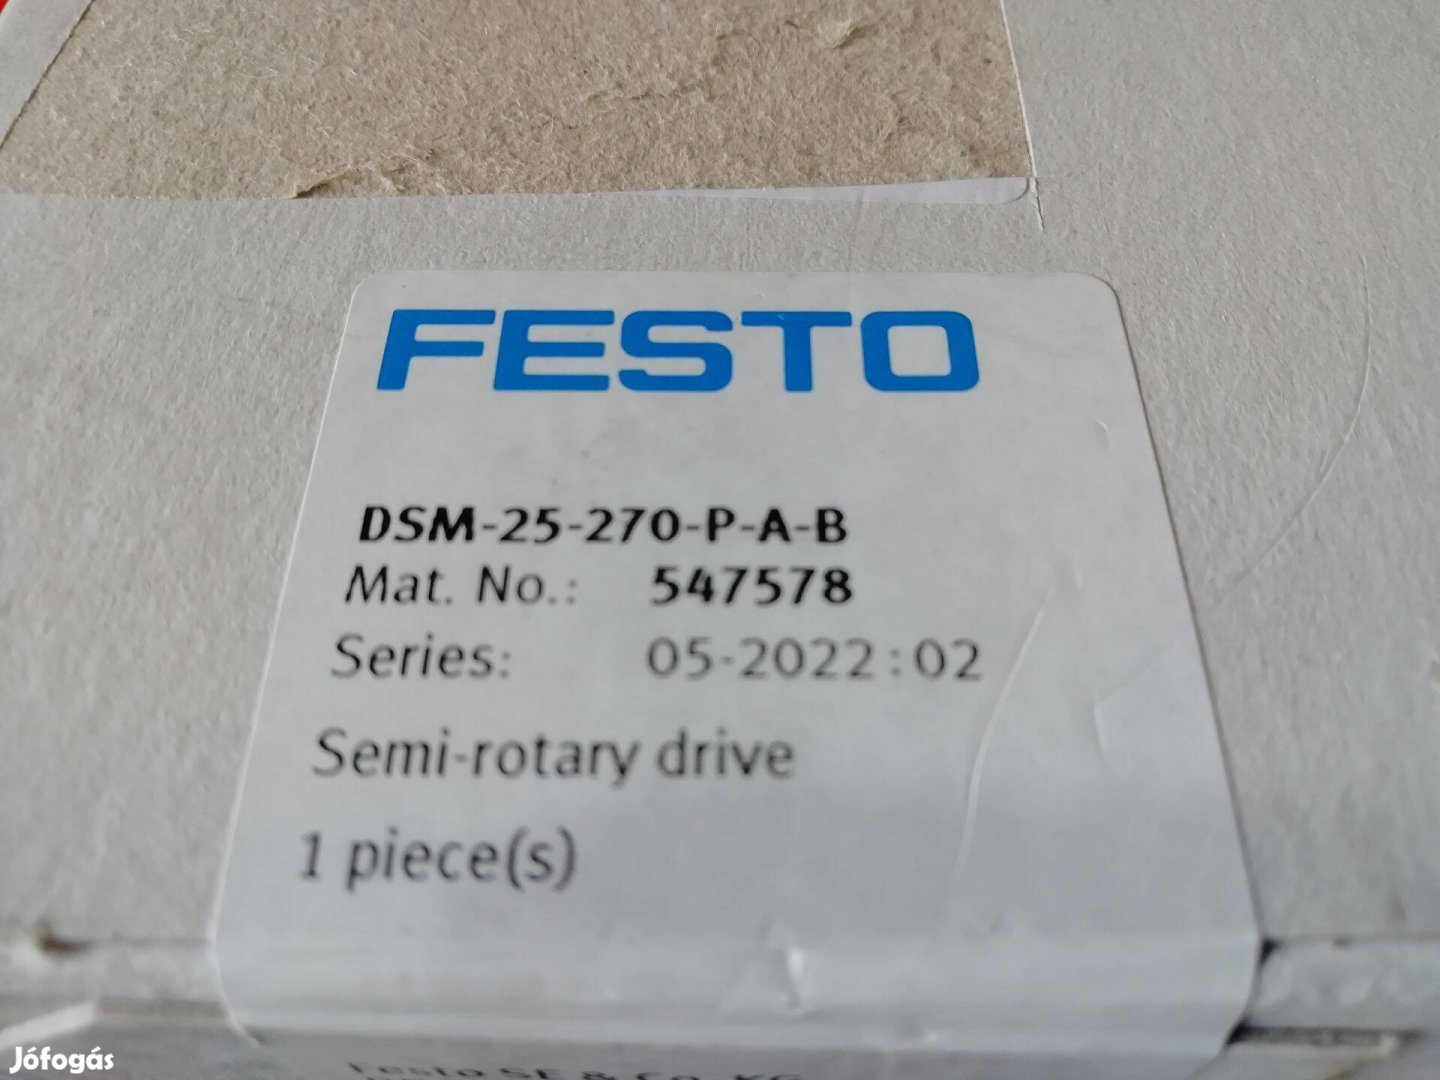 Festo DMS-25-270-P-A-B 547578